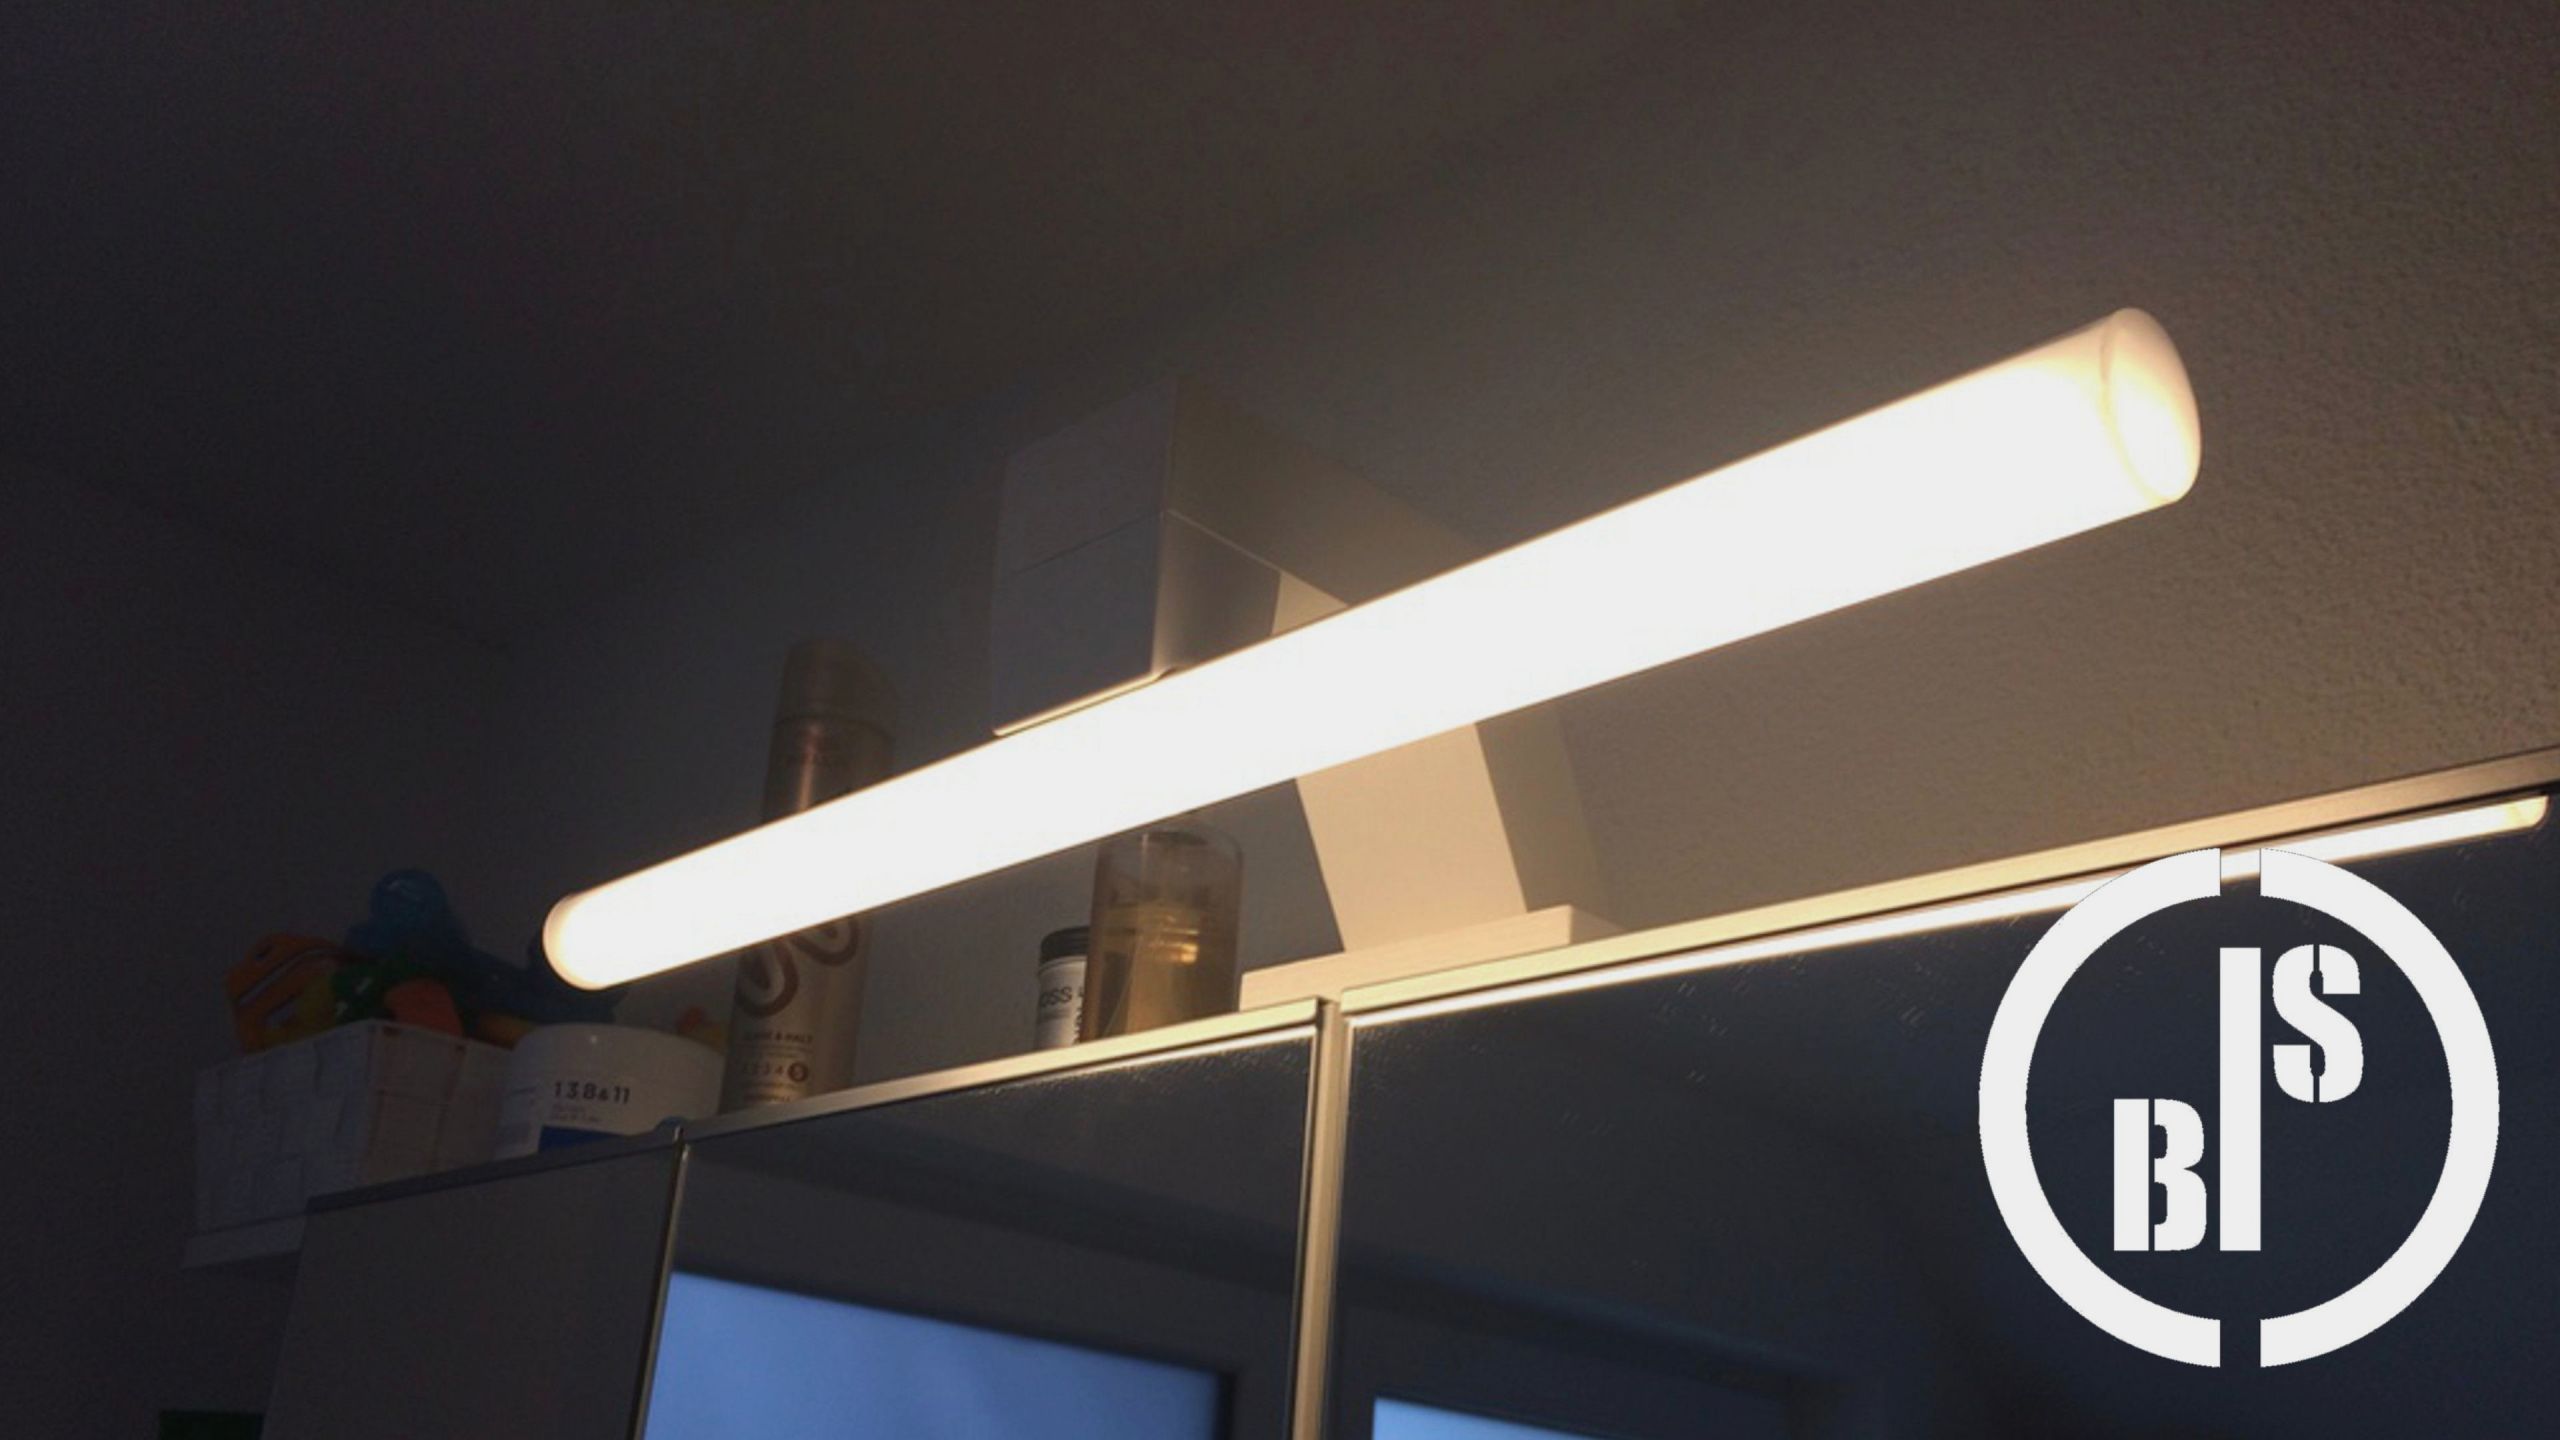 wohnkultur wagenrad lampe selber bauen diy bathroom light badezimmer because we didnt